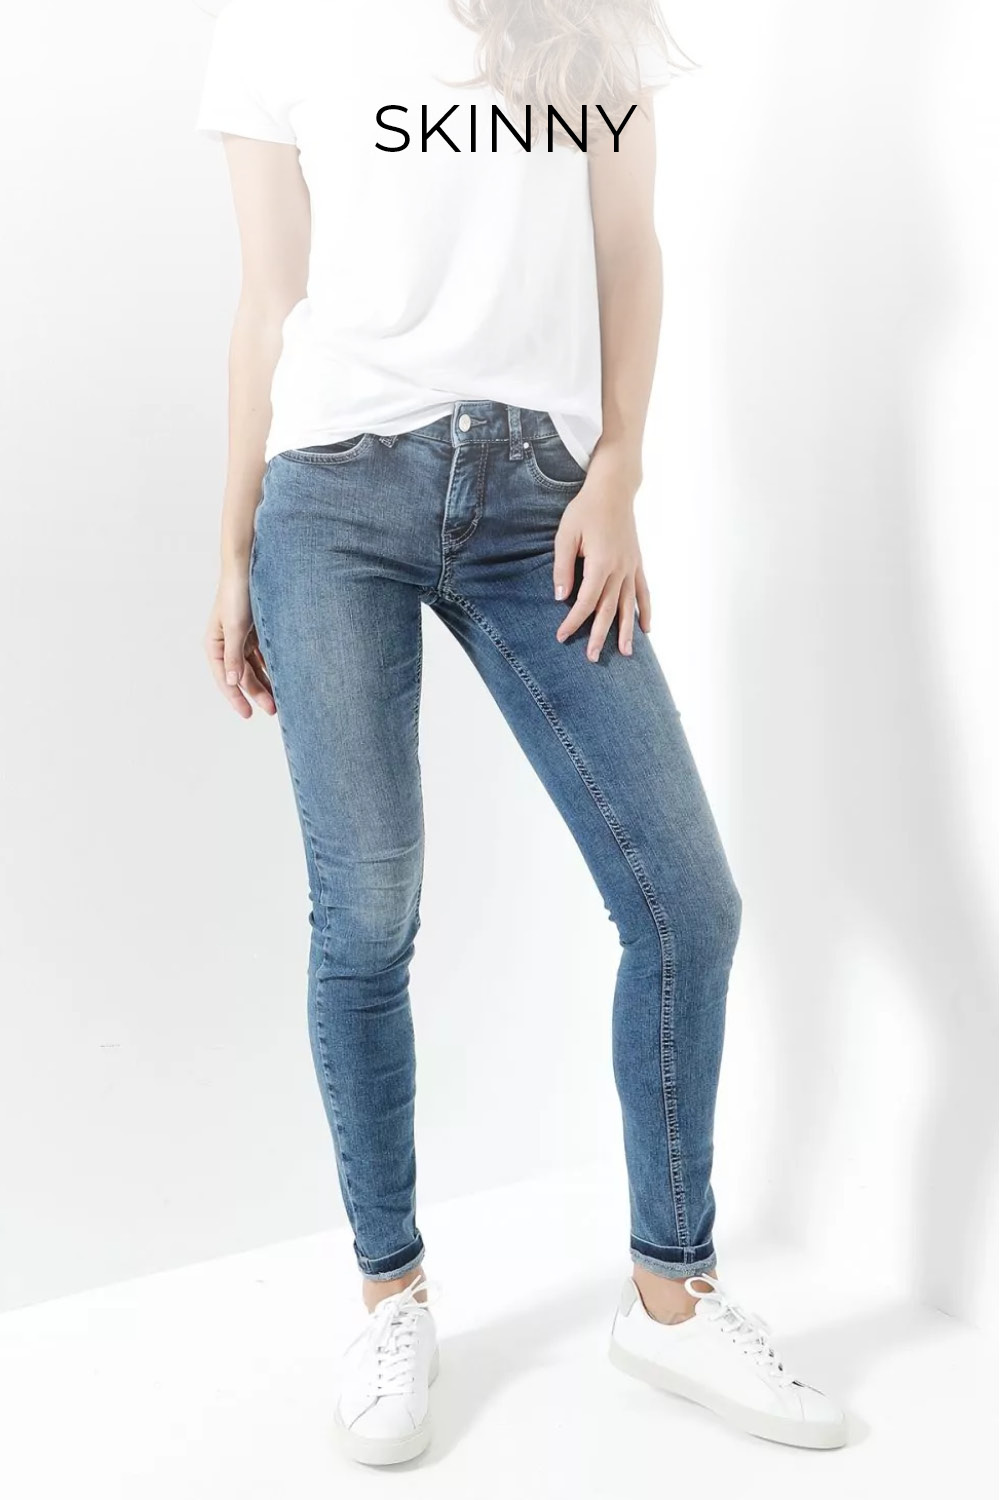 Jeans-Fit-Guide-Damen-Skinny